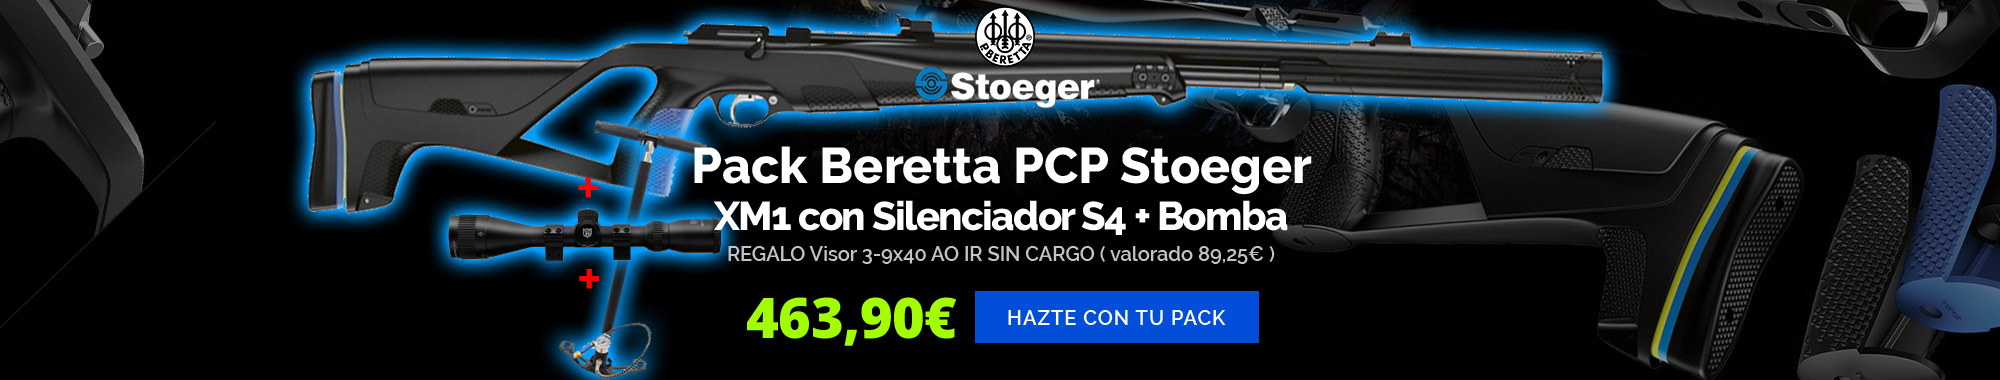 Pack Beretta XM1 con silenciador